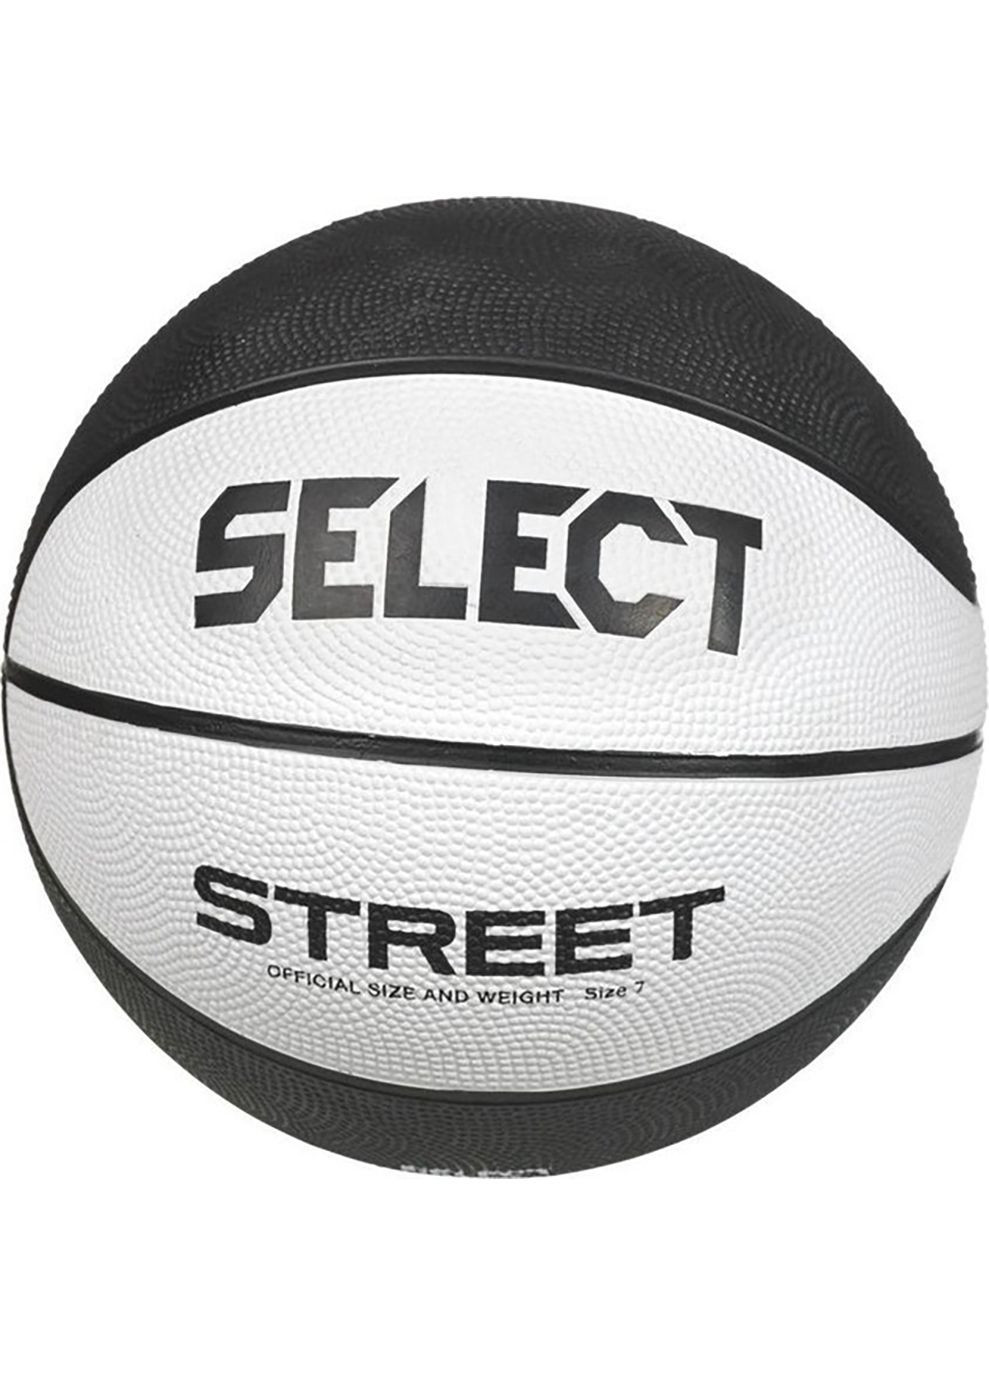 М'яч баскетбольний BASKETBALL STREET v23 біло-чорний Уні 5 Select (282616589)